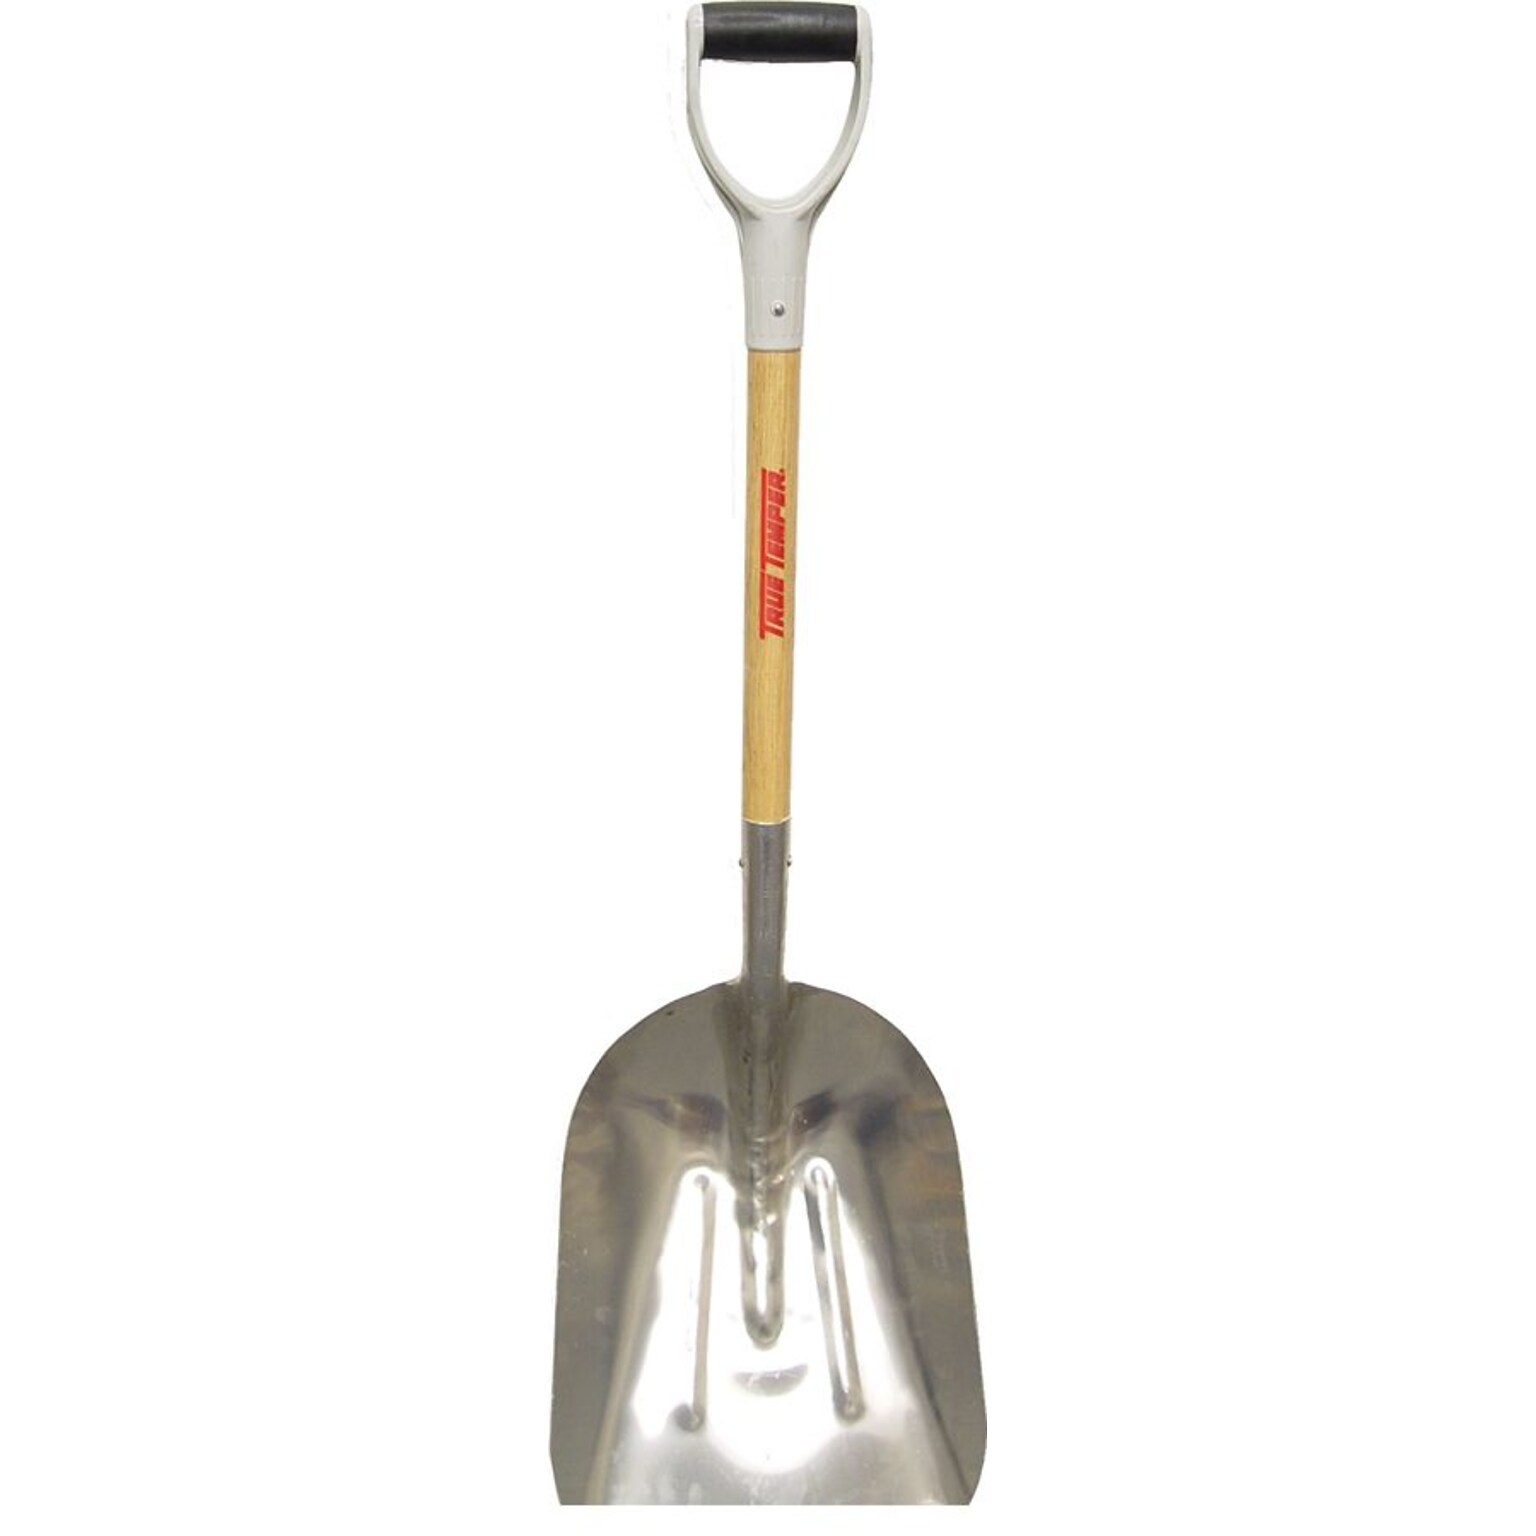 Ames® 1670900 Kodiak 27 No. 10 Hollow Back Scoop Shovel With Wood D-grip Handle